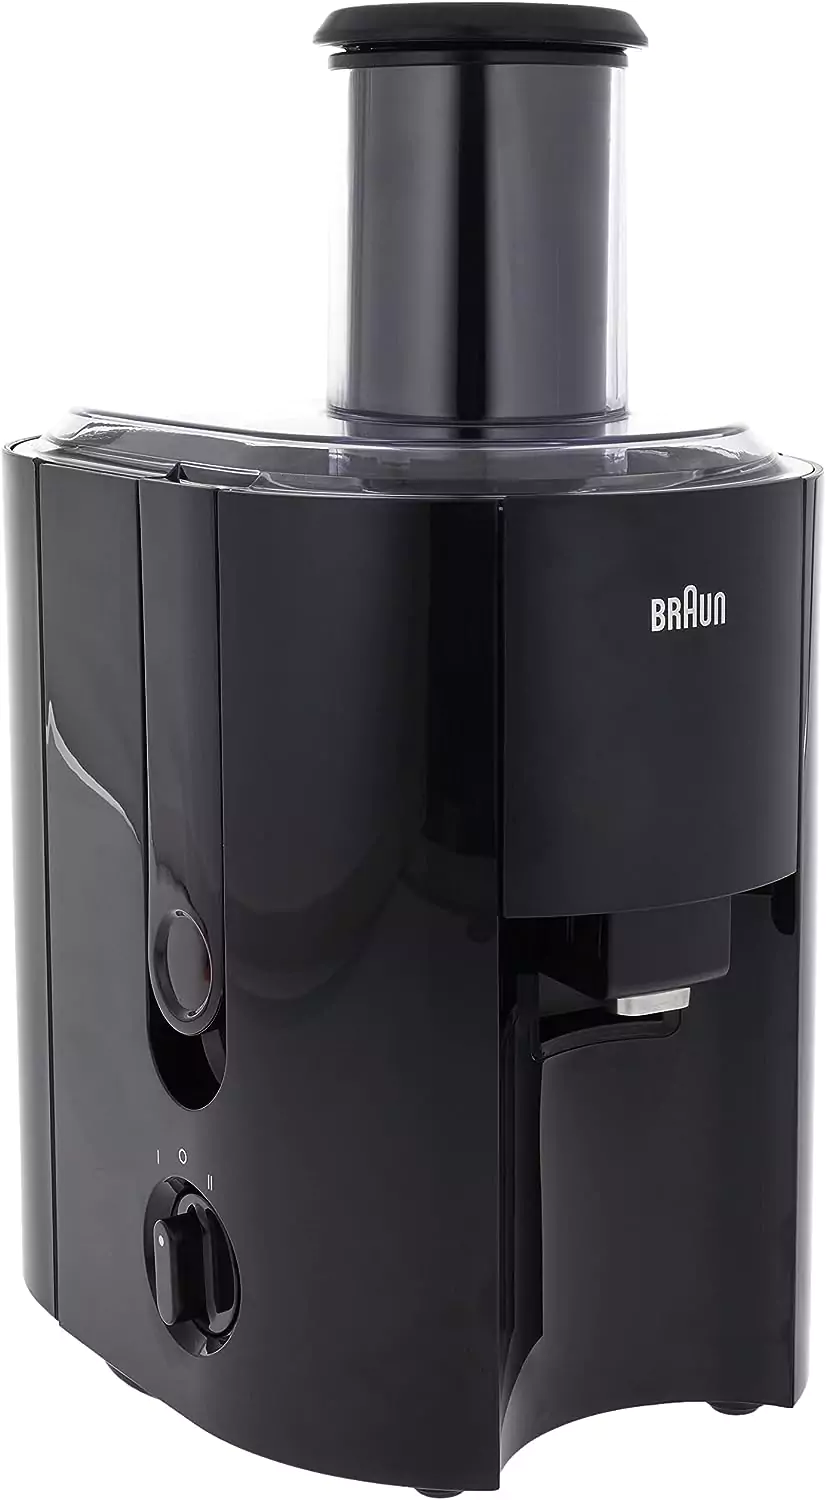 Braun Multiquick 3 Juicer, Black - J300